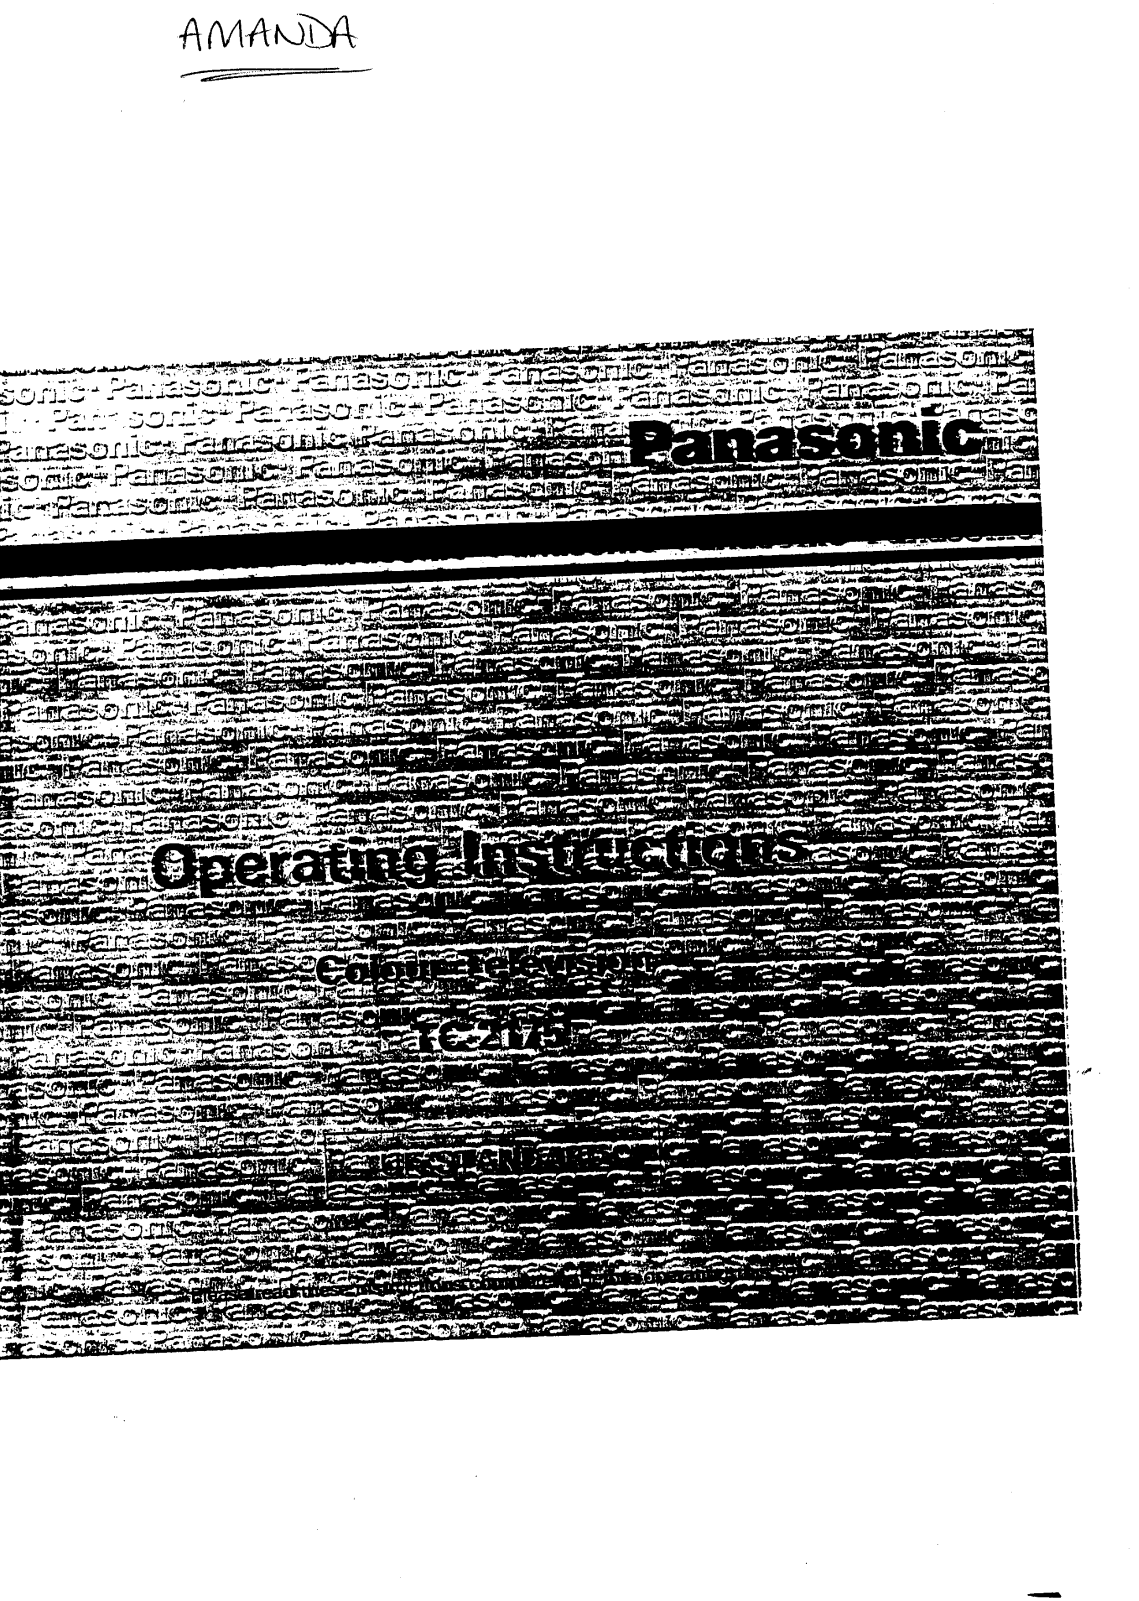 Panasonic TC-2175 User Manual